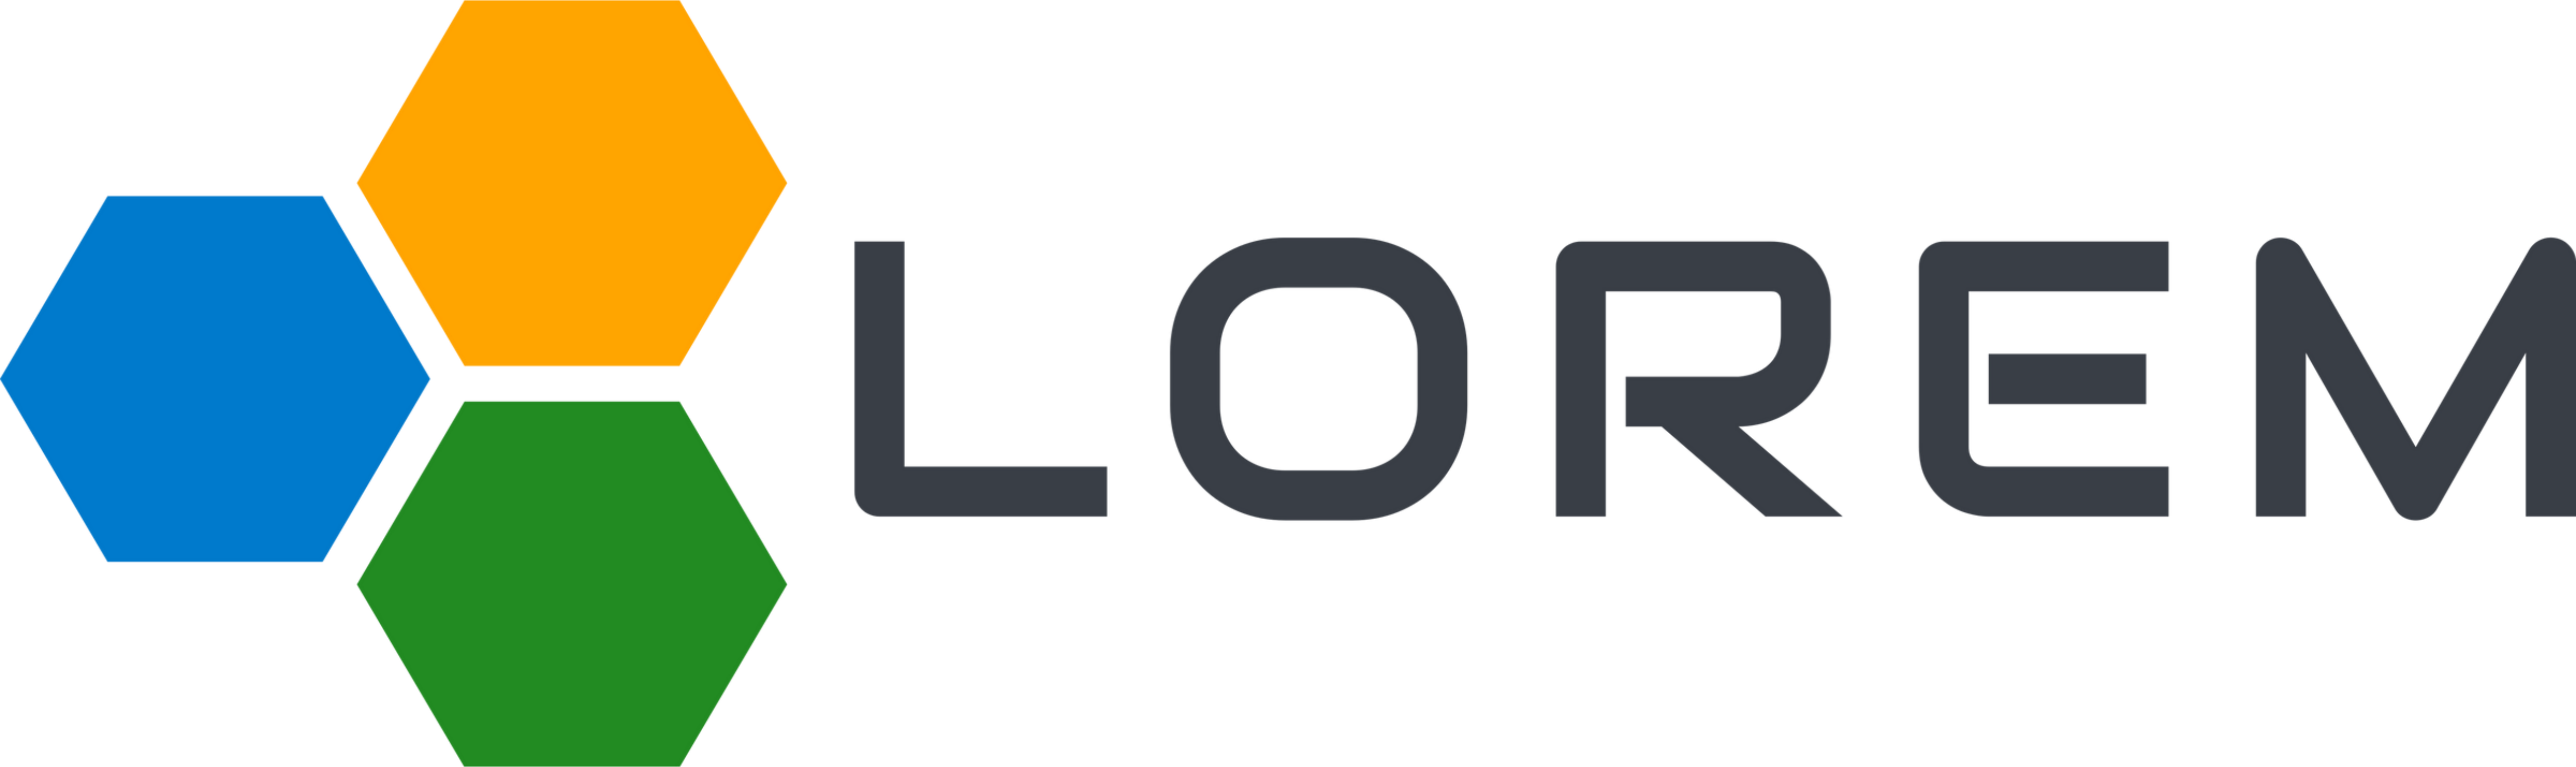 lorem_logo